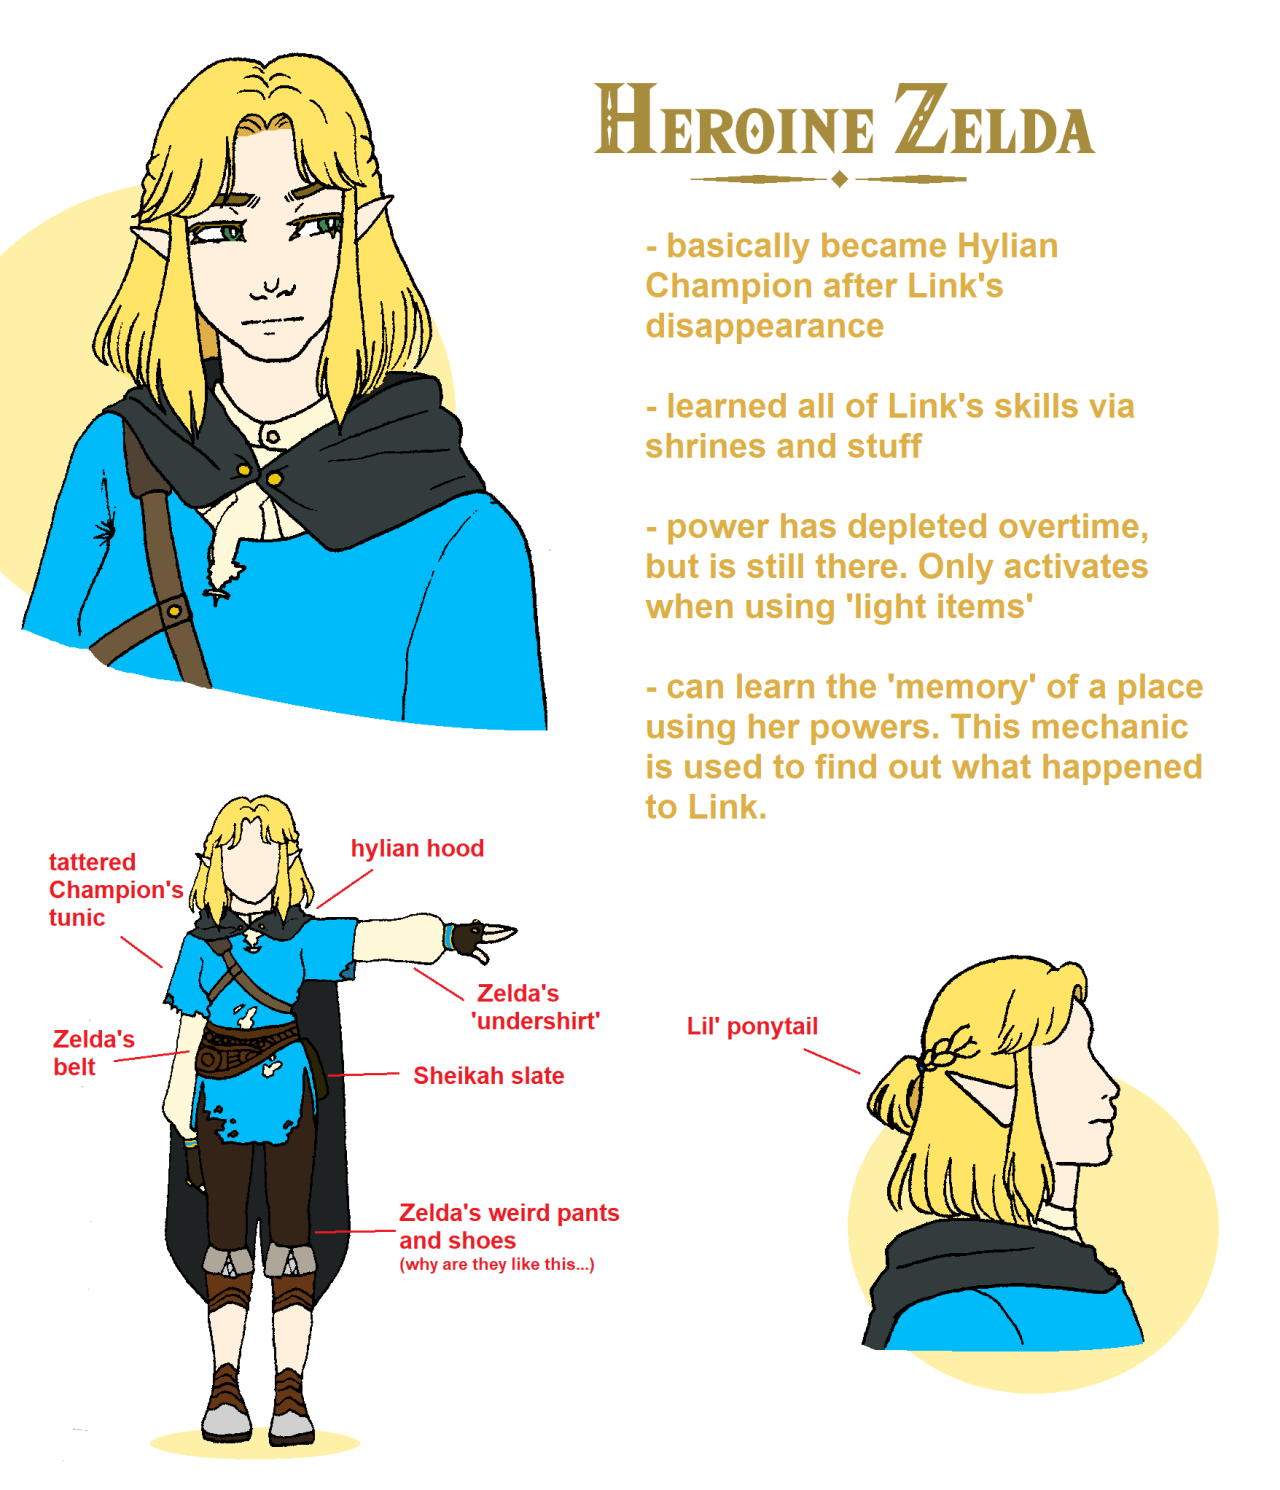 Legend of Zelda Fan Art Transports Link and Zelda into Spirited Away